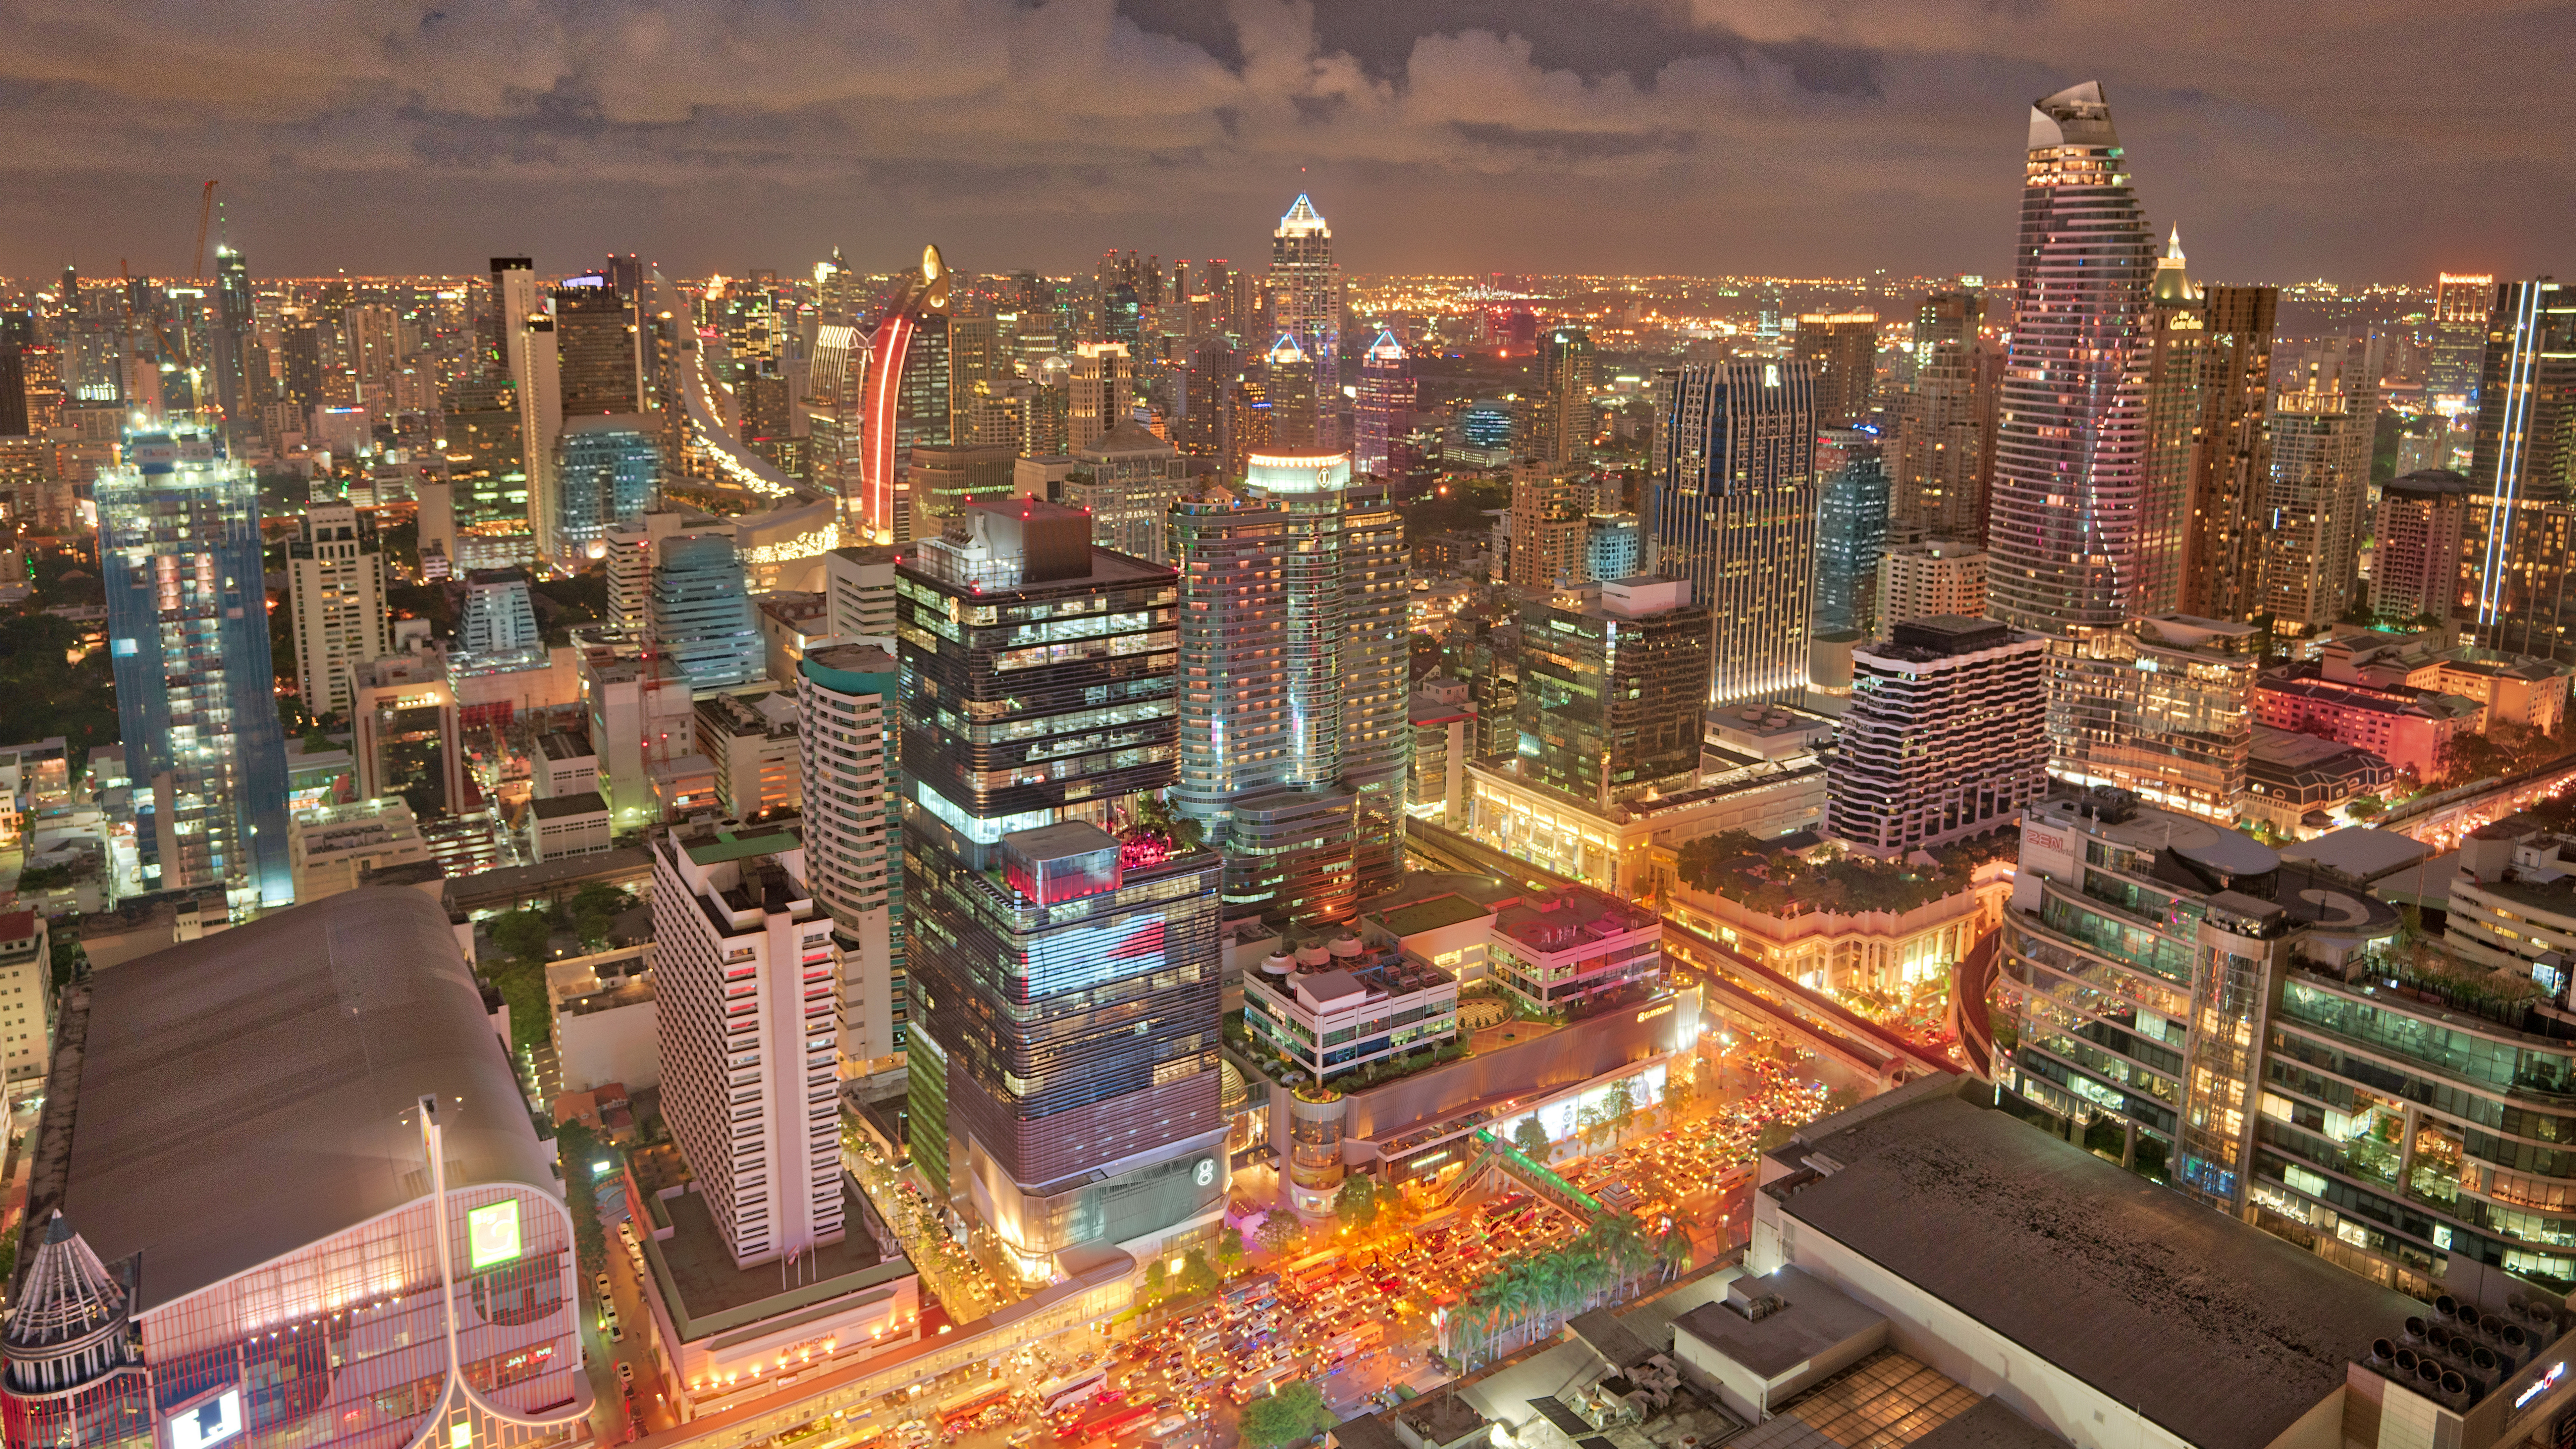 General 7680x4320 Trey Ratcliff Thailand Bangkok city lights skyscraper